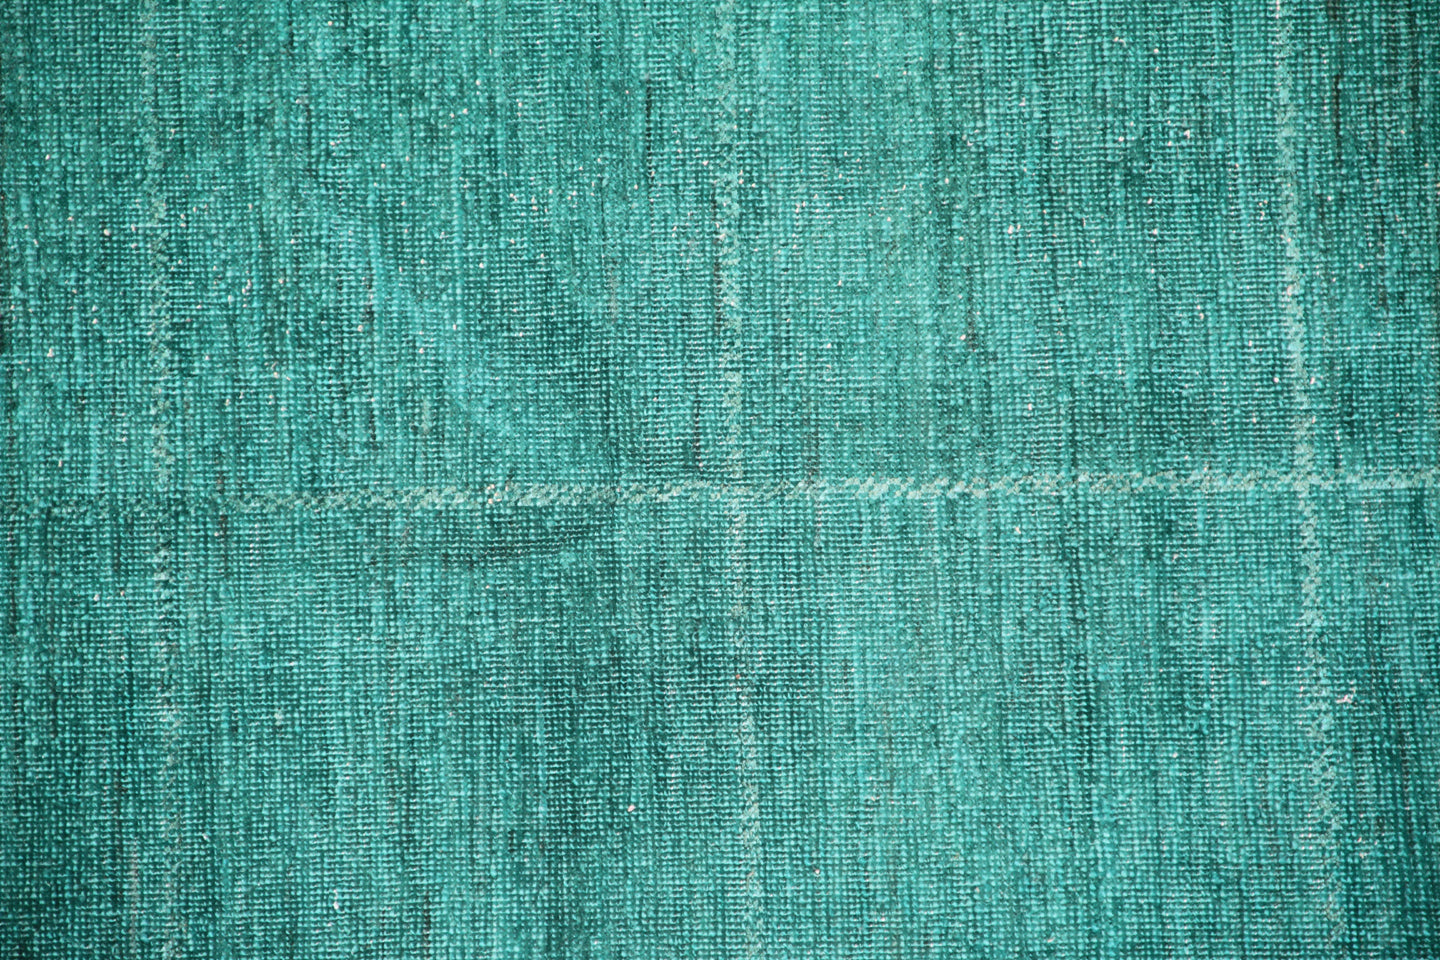 5'x5' Ariana Square green Over dye Rug